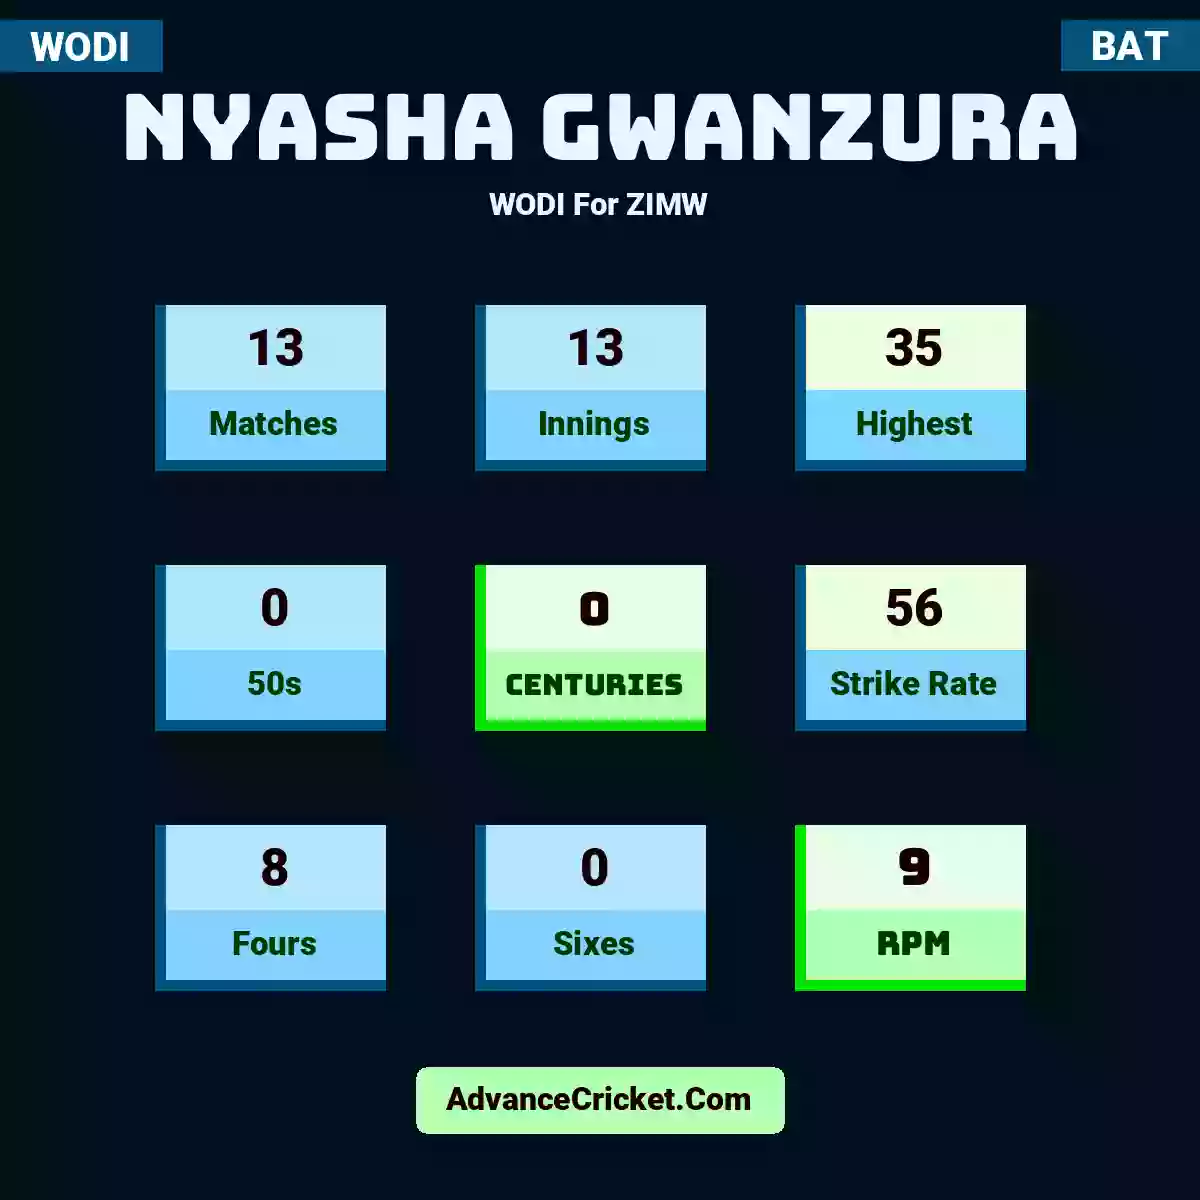 Nyasha Gwanzura WODI  For ZIMW, Nyasha Gwanzura played 13 matches, scored 35 runs as highest, 0 half-centuries, and 0 centuries, with a strike rate of 56. N.Gwanzura hit 8 fours and 0 sixes, with an RPM of 9.